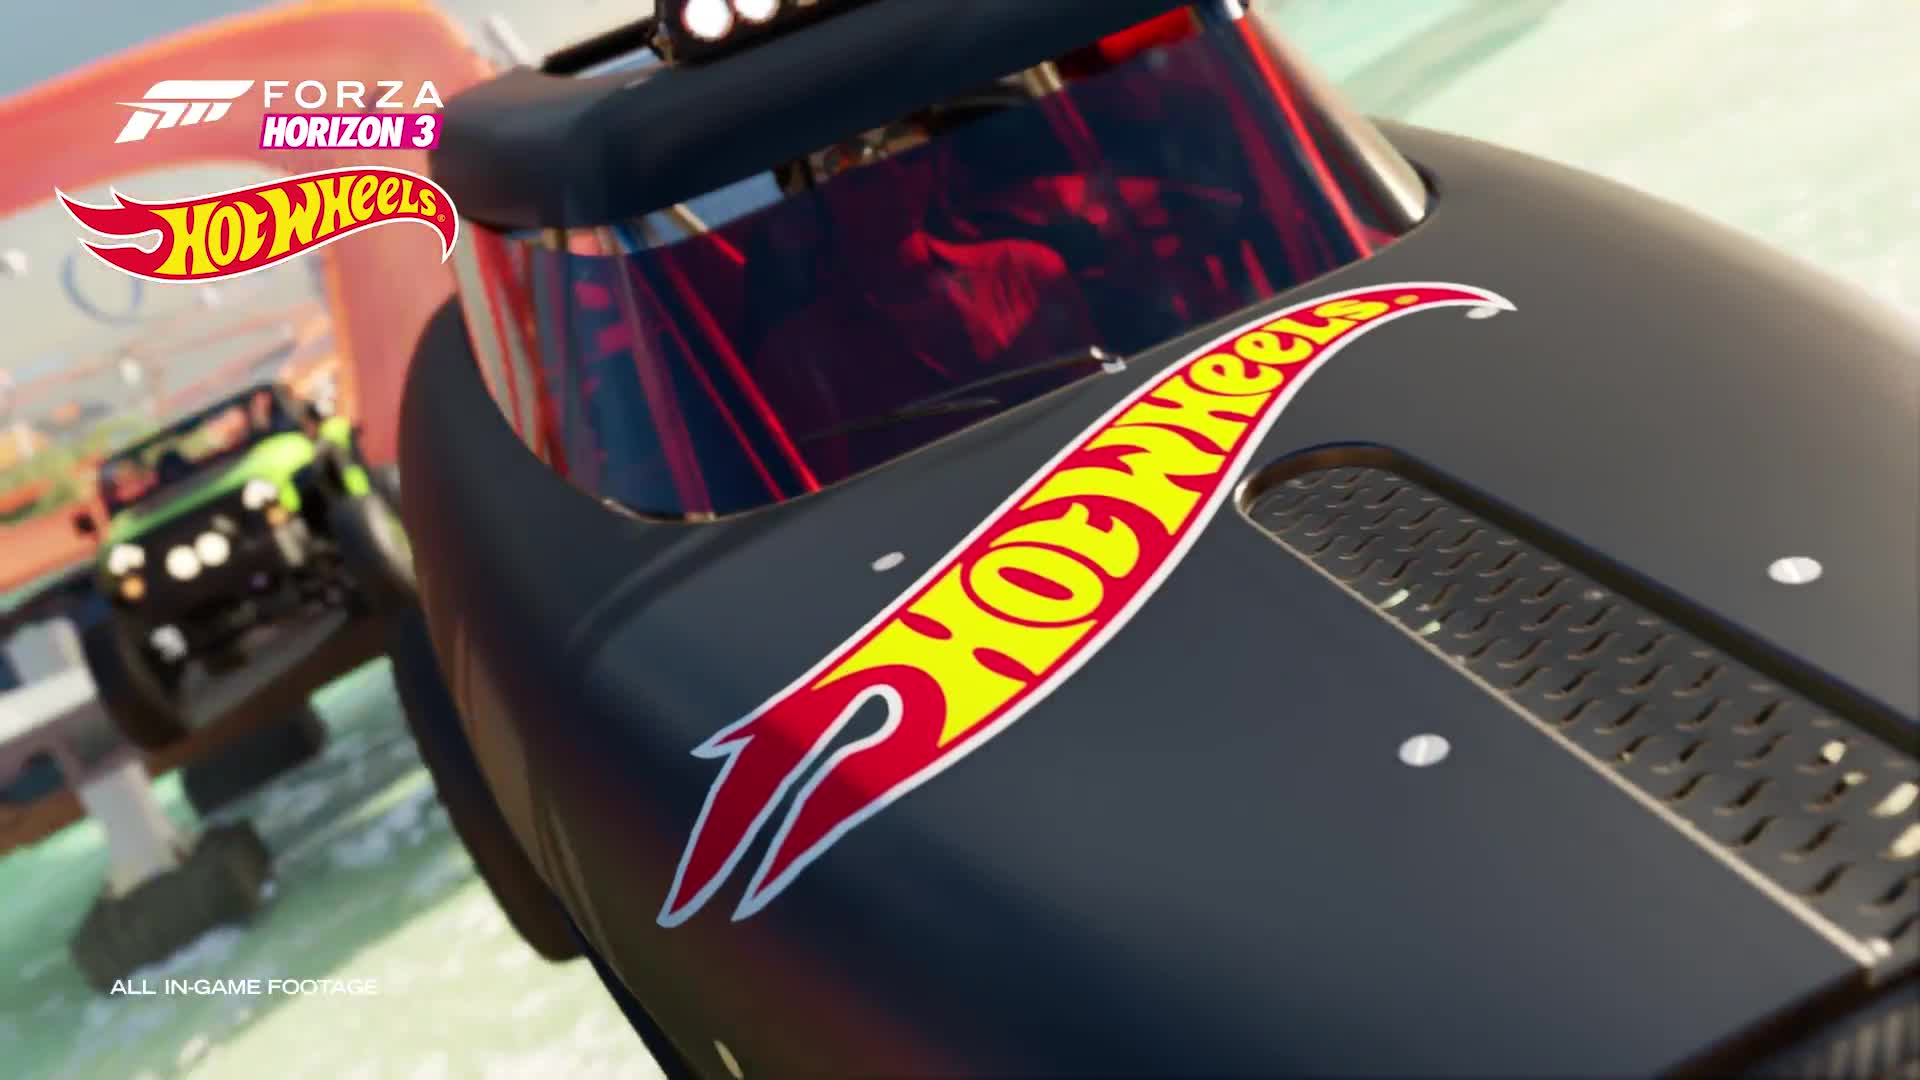 Forza Horizon 3: Hot Wheels - trailer